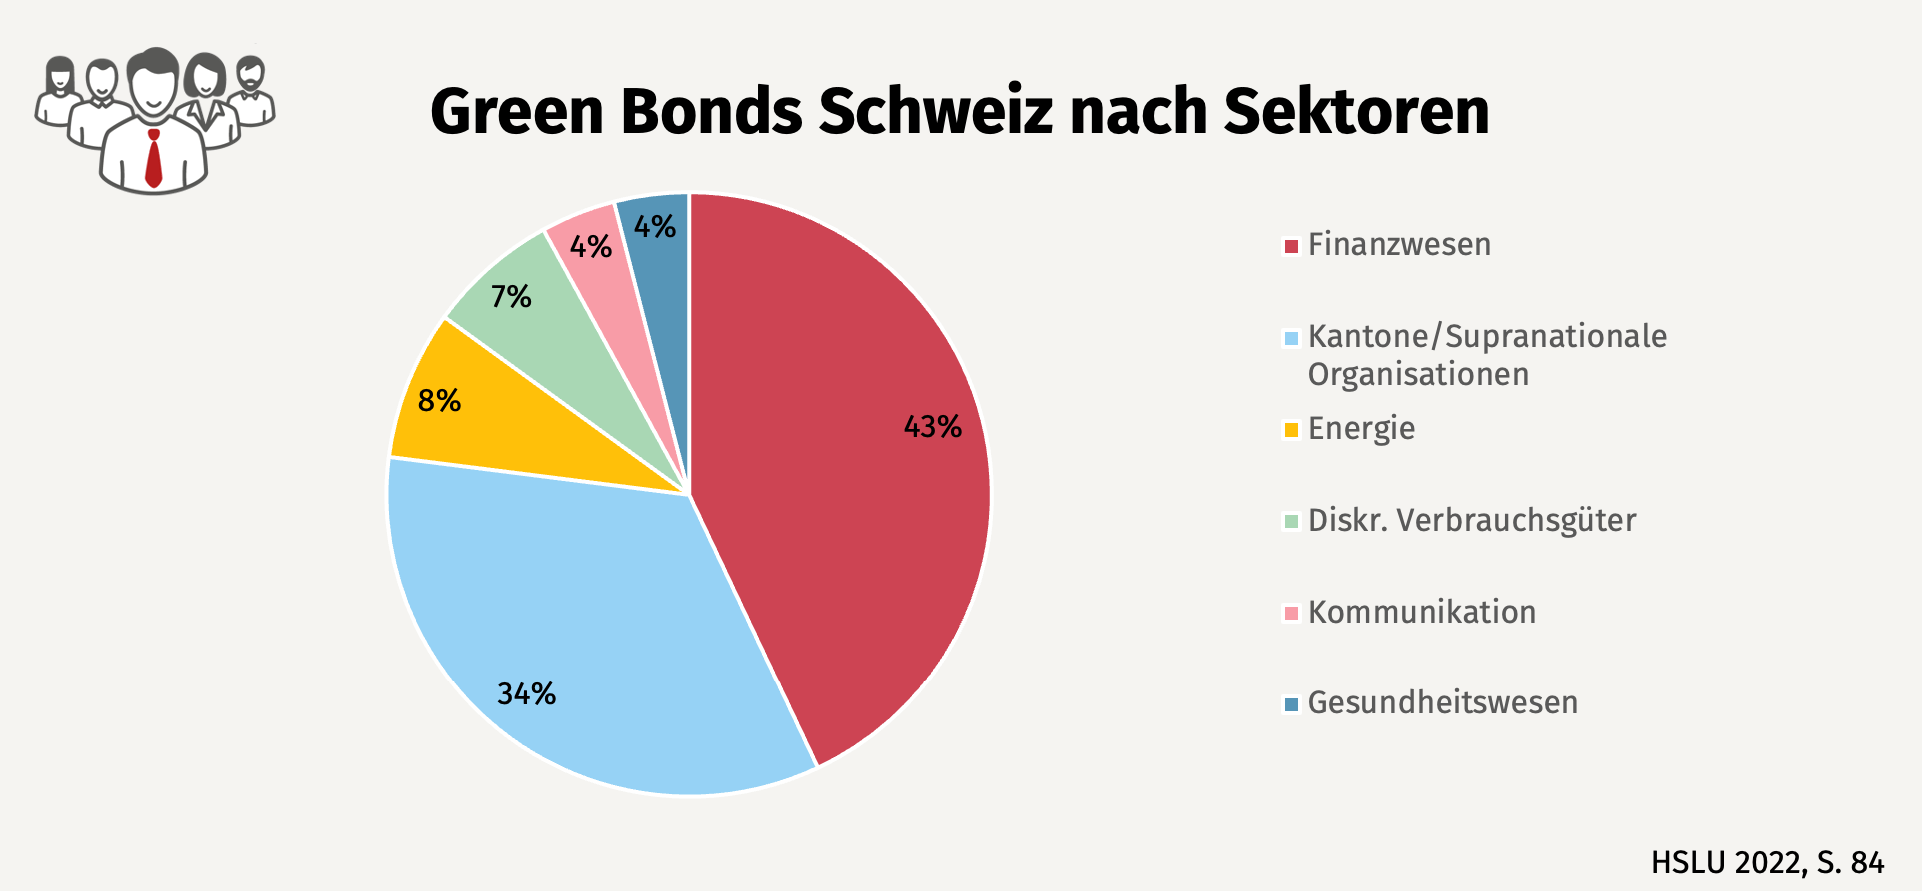 greenbonds_schweiz_sektoren_2022